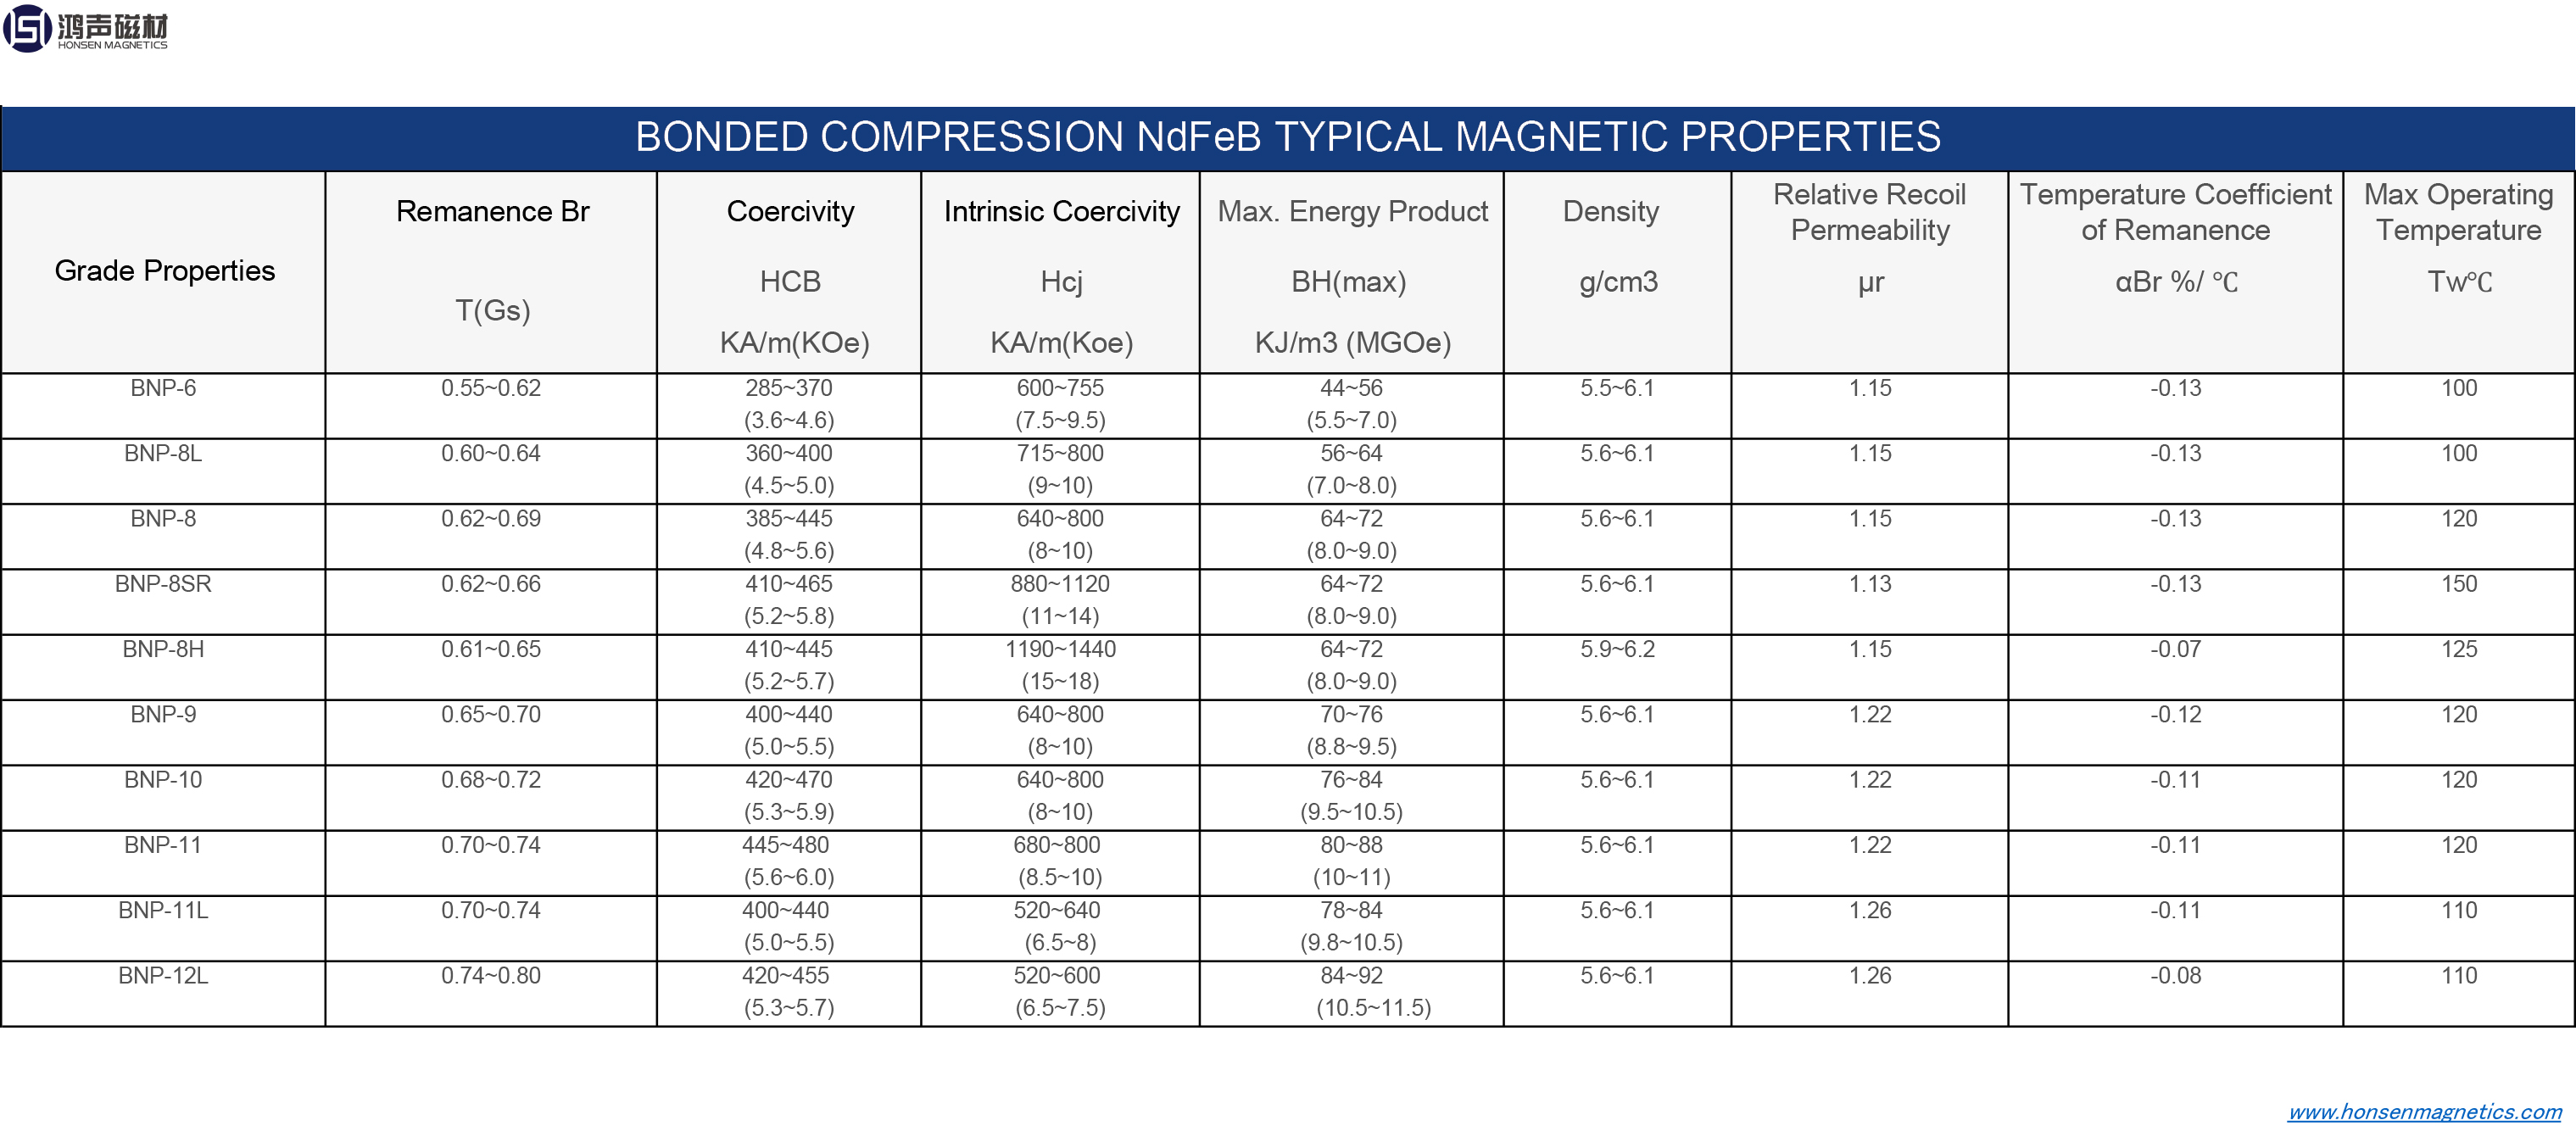 Magnetica Proprietatibus Bonded Compressio NdFeB Magnets